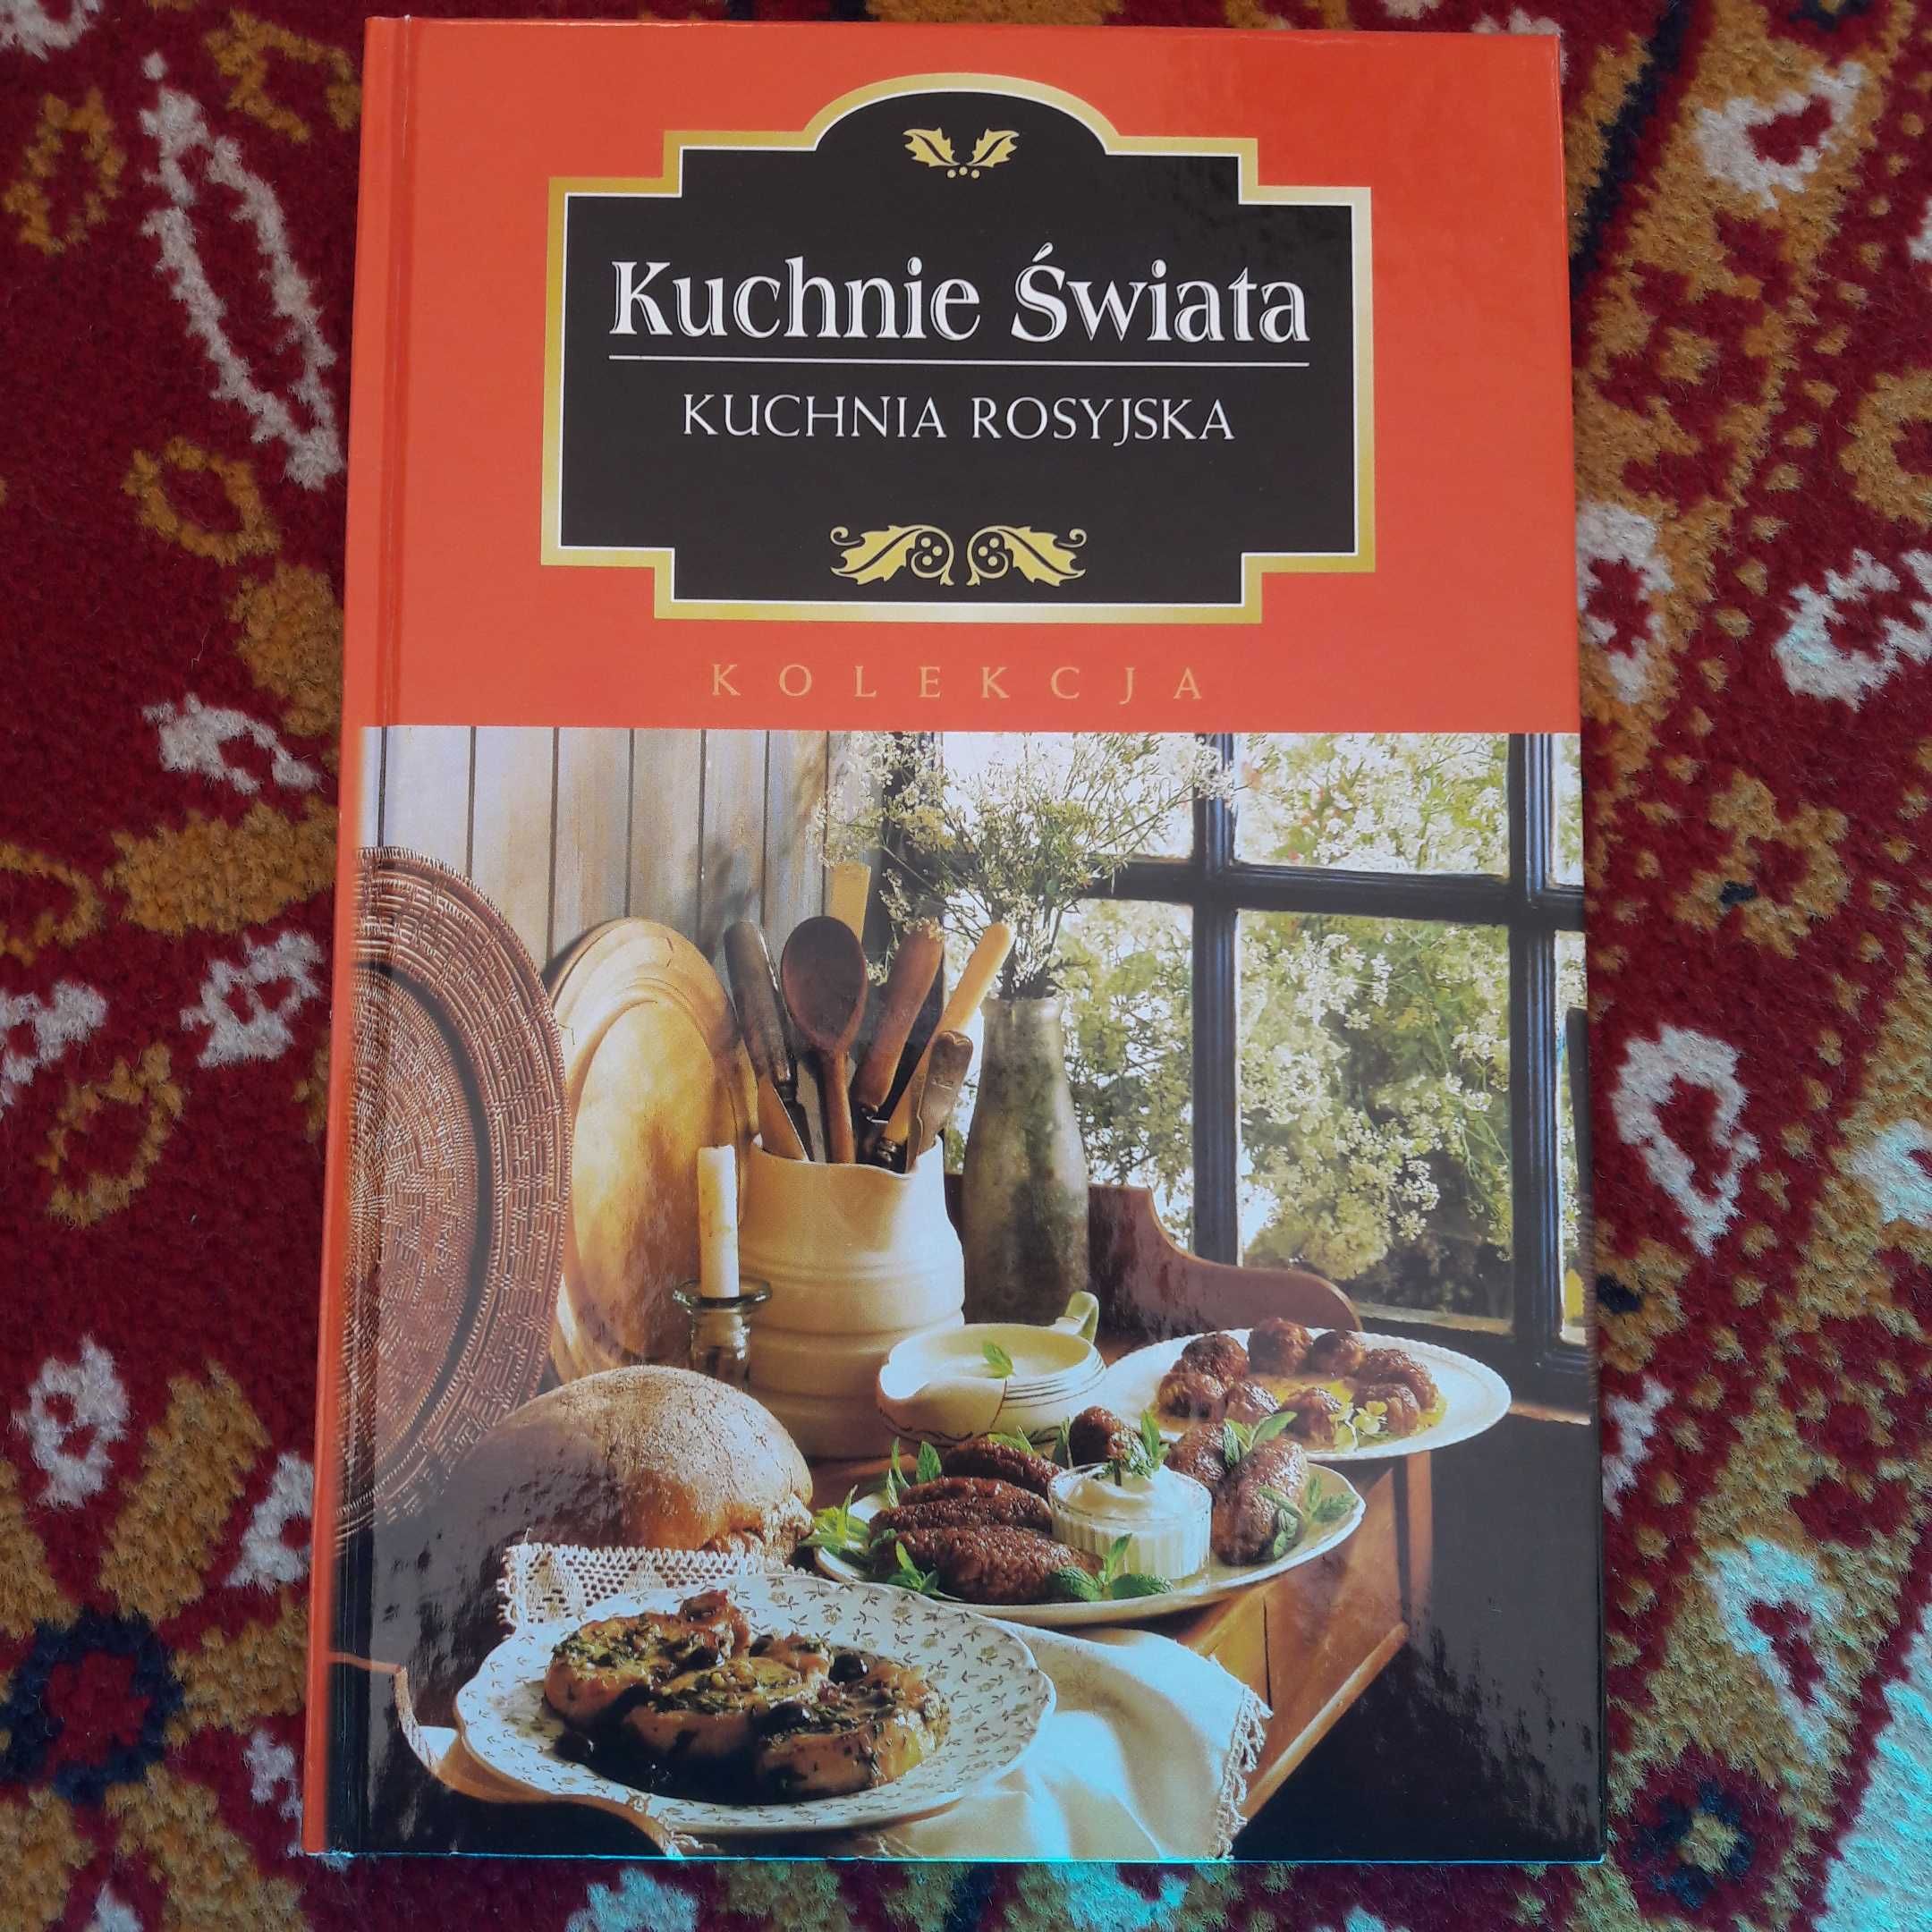 Kuchnie świata kuchnia rosyjska